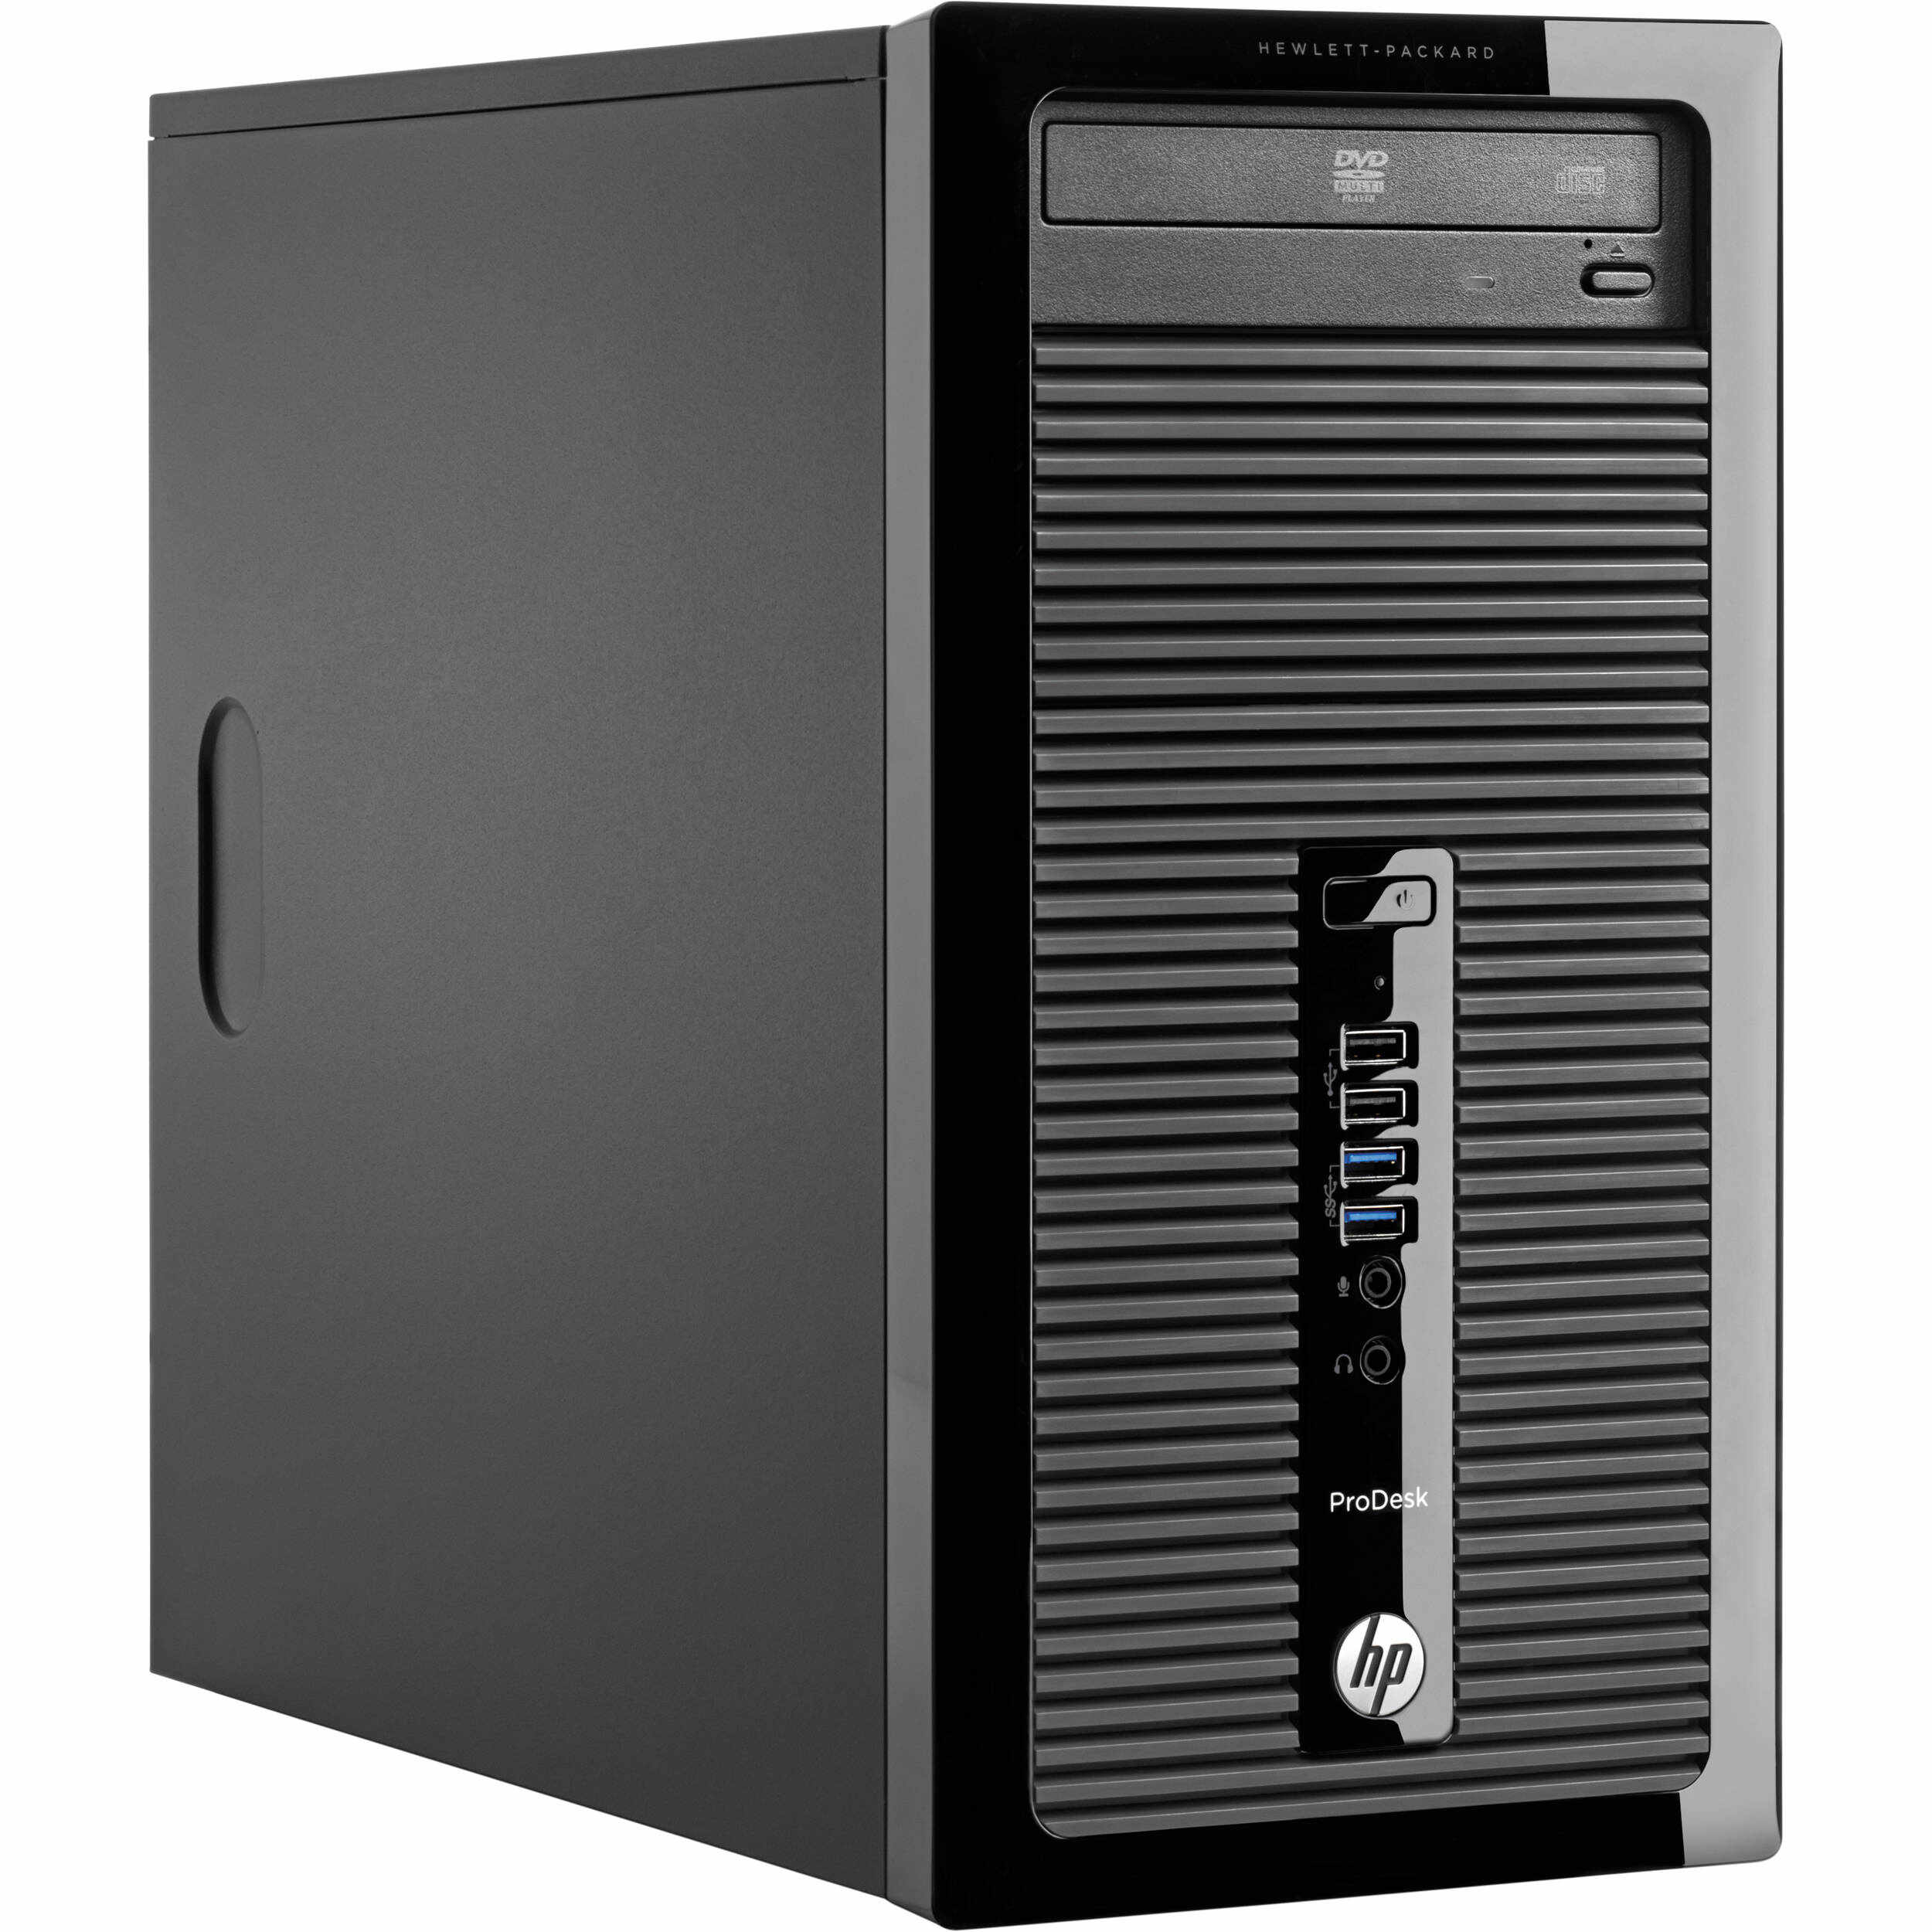 PC Second Hand HP 400 G1 Tower, Intel Core i5-4570 3.20GHz, 8GB DDR3, 240GB SSD, DVD-RW